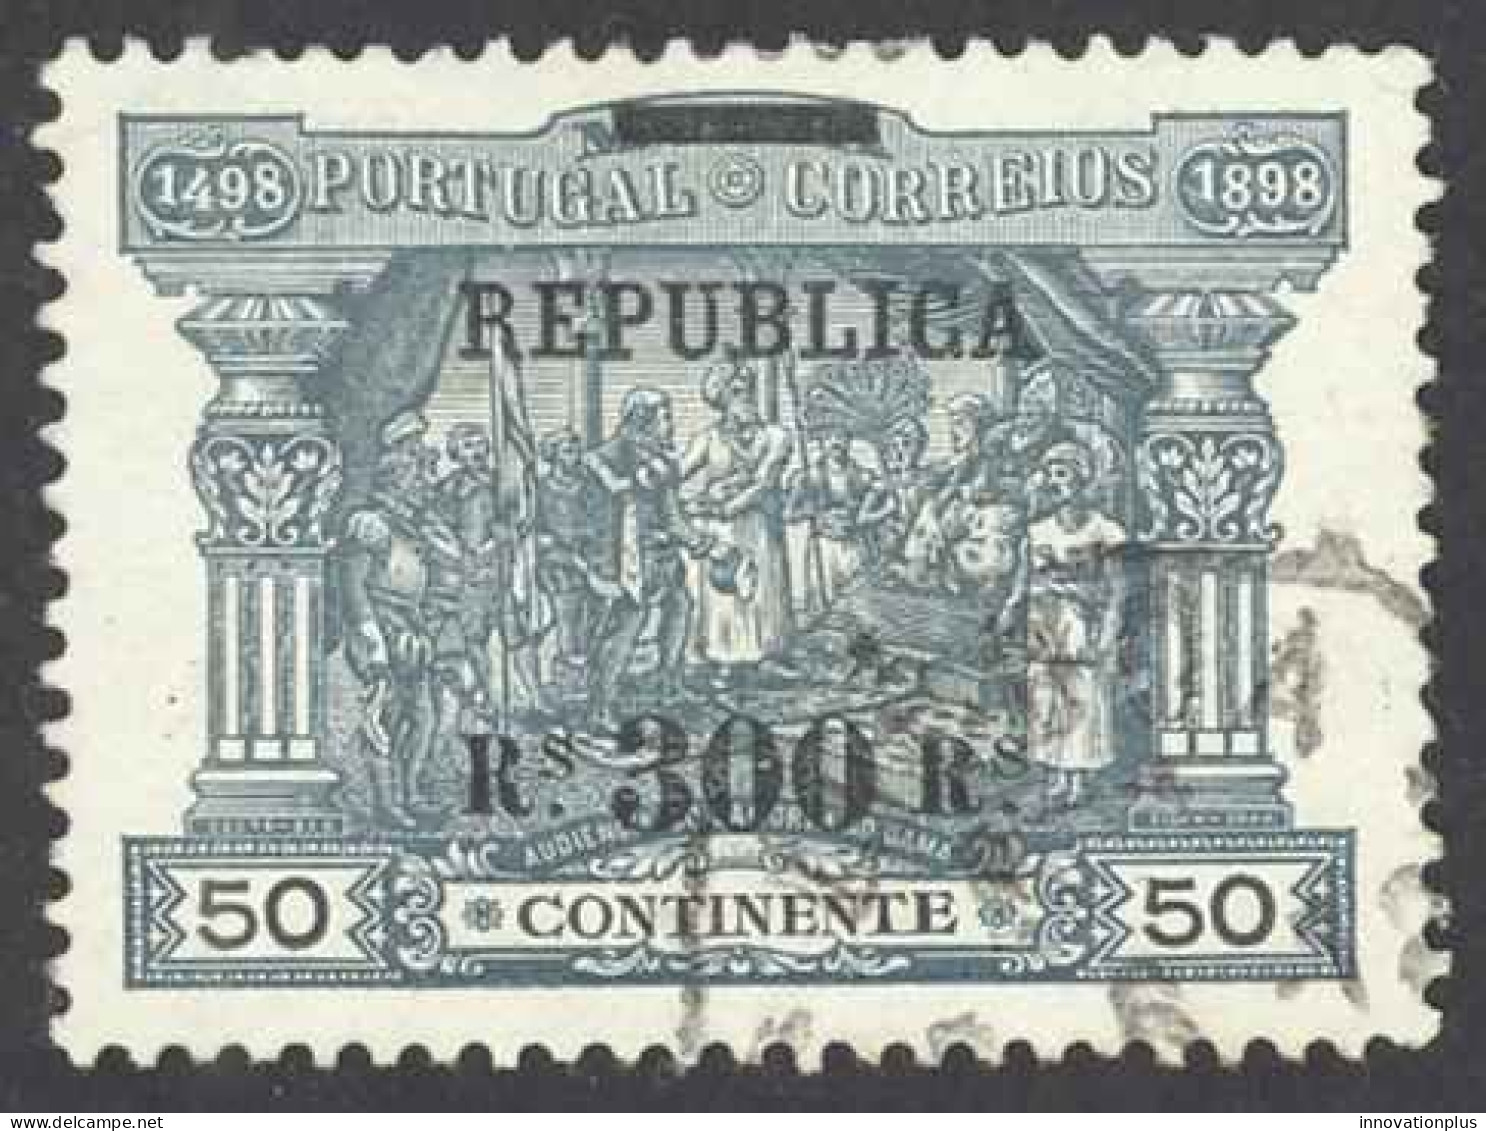 Portugal Sc# 197 Used (b) 1911 300r On 50r Overprint Postage Due - Oblitérés